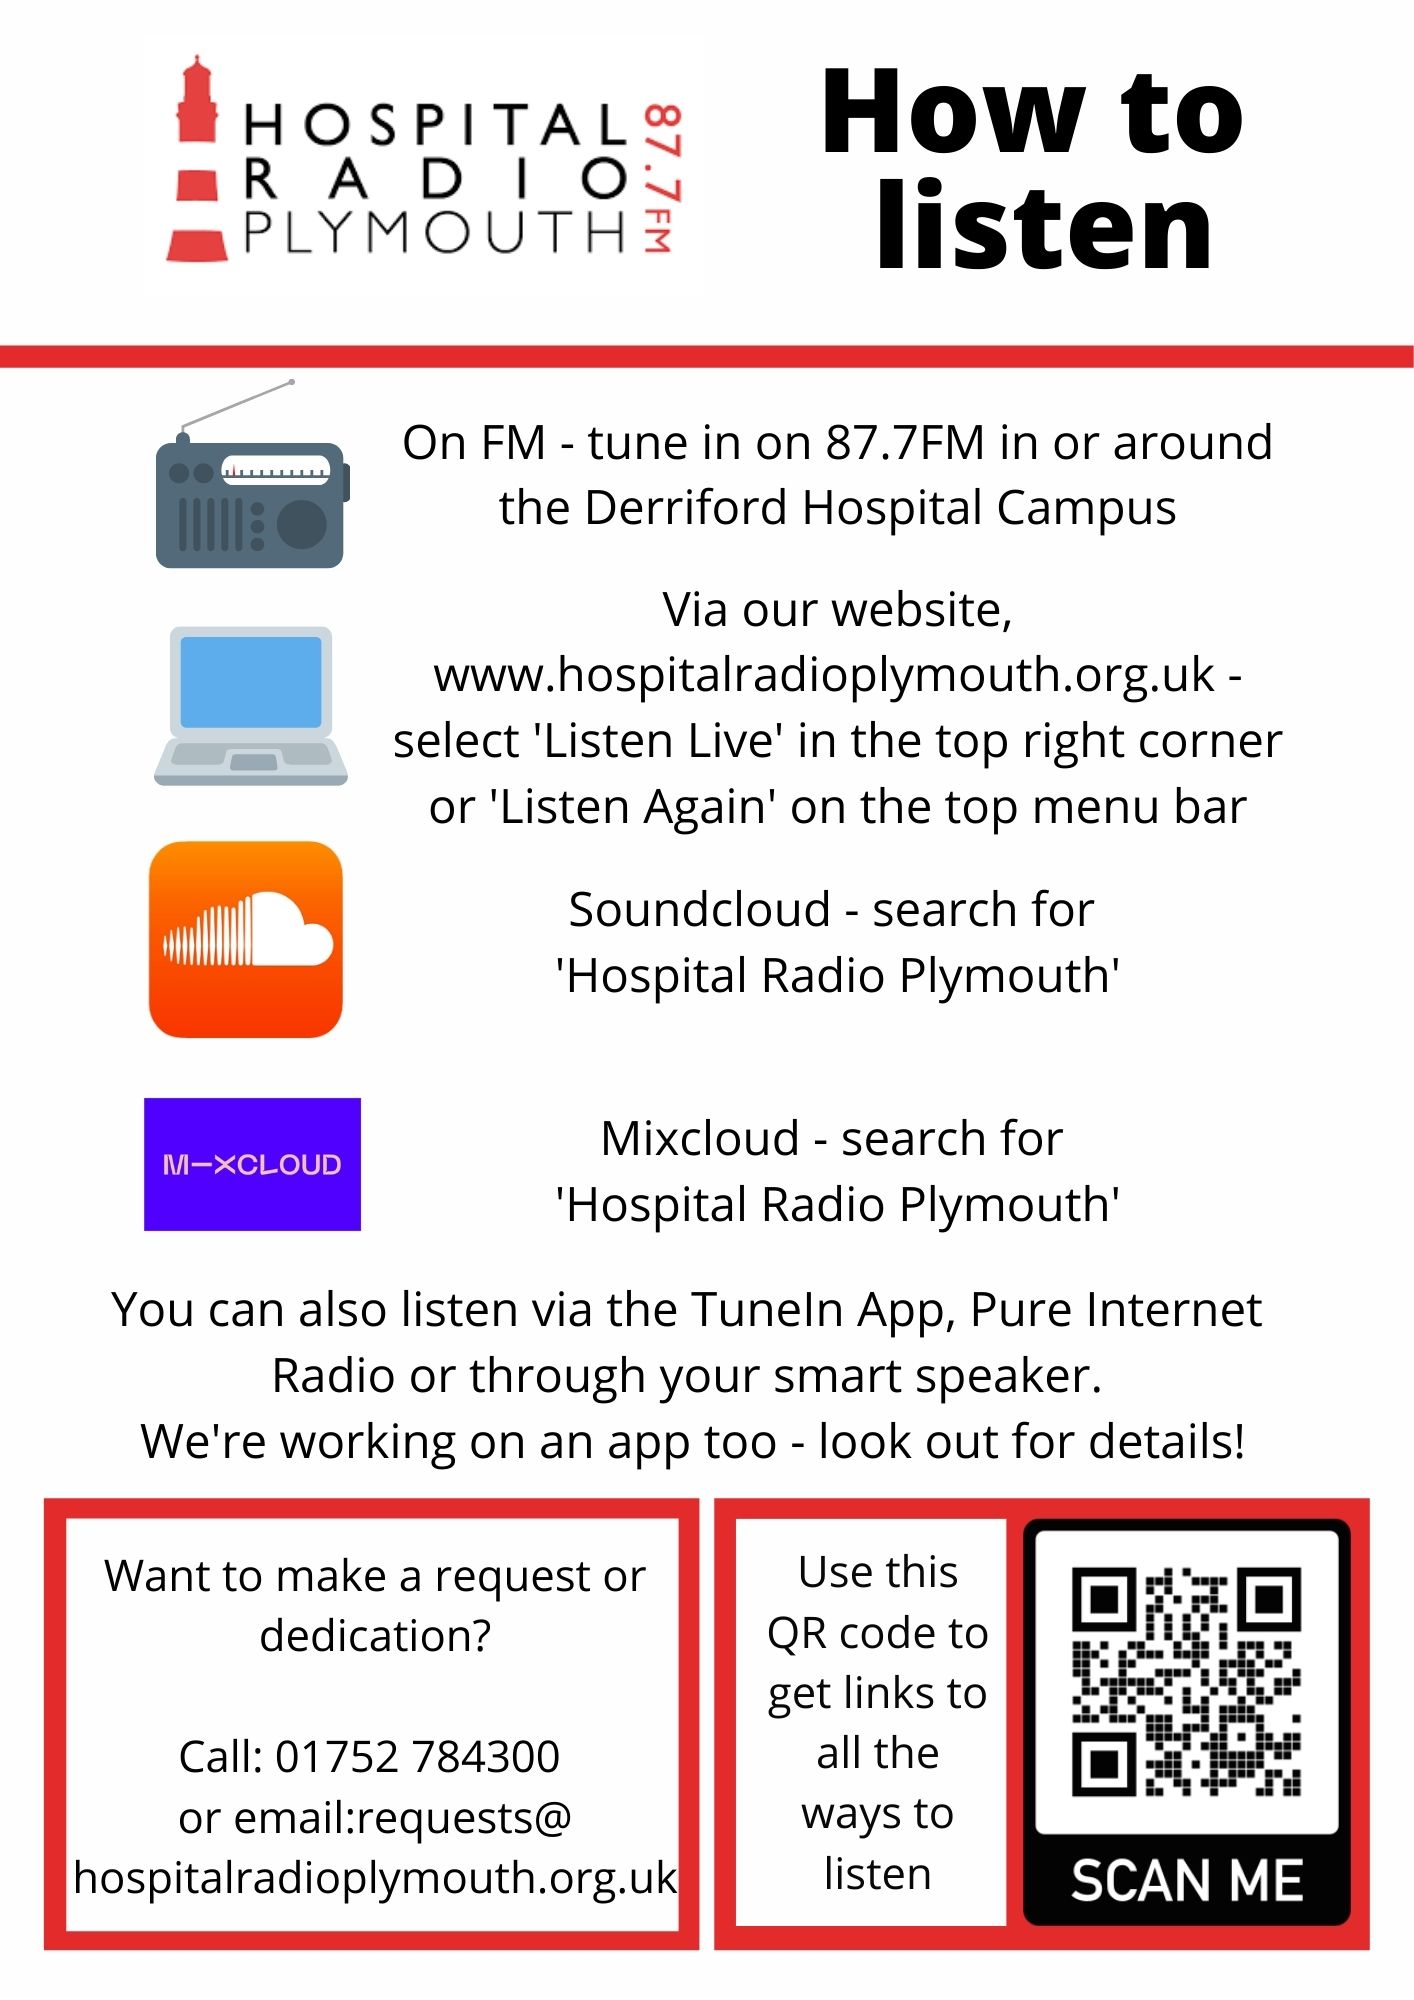 List of ways to listen to Hospital Radio Plymouth 87.7FM